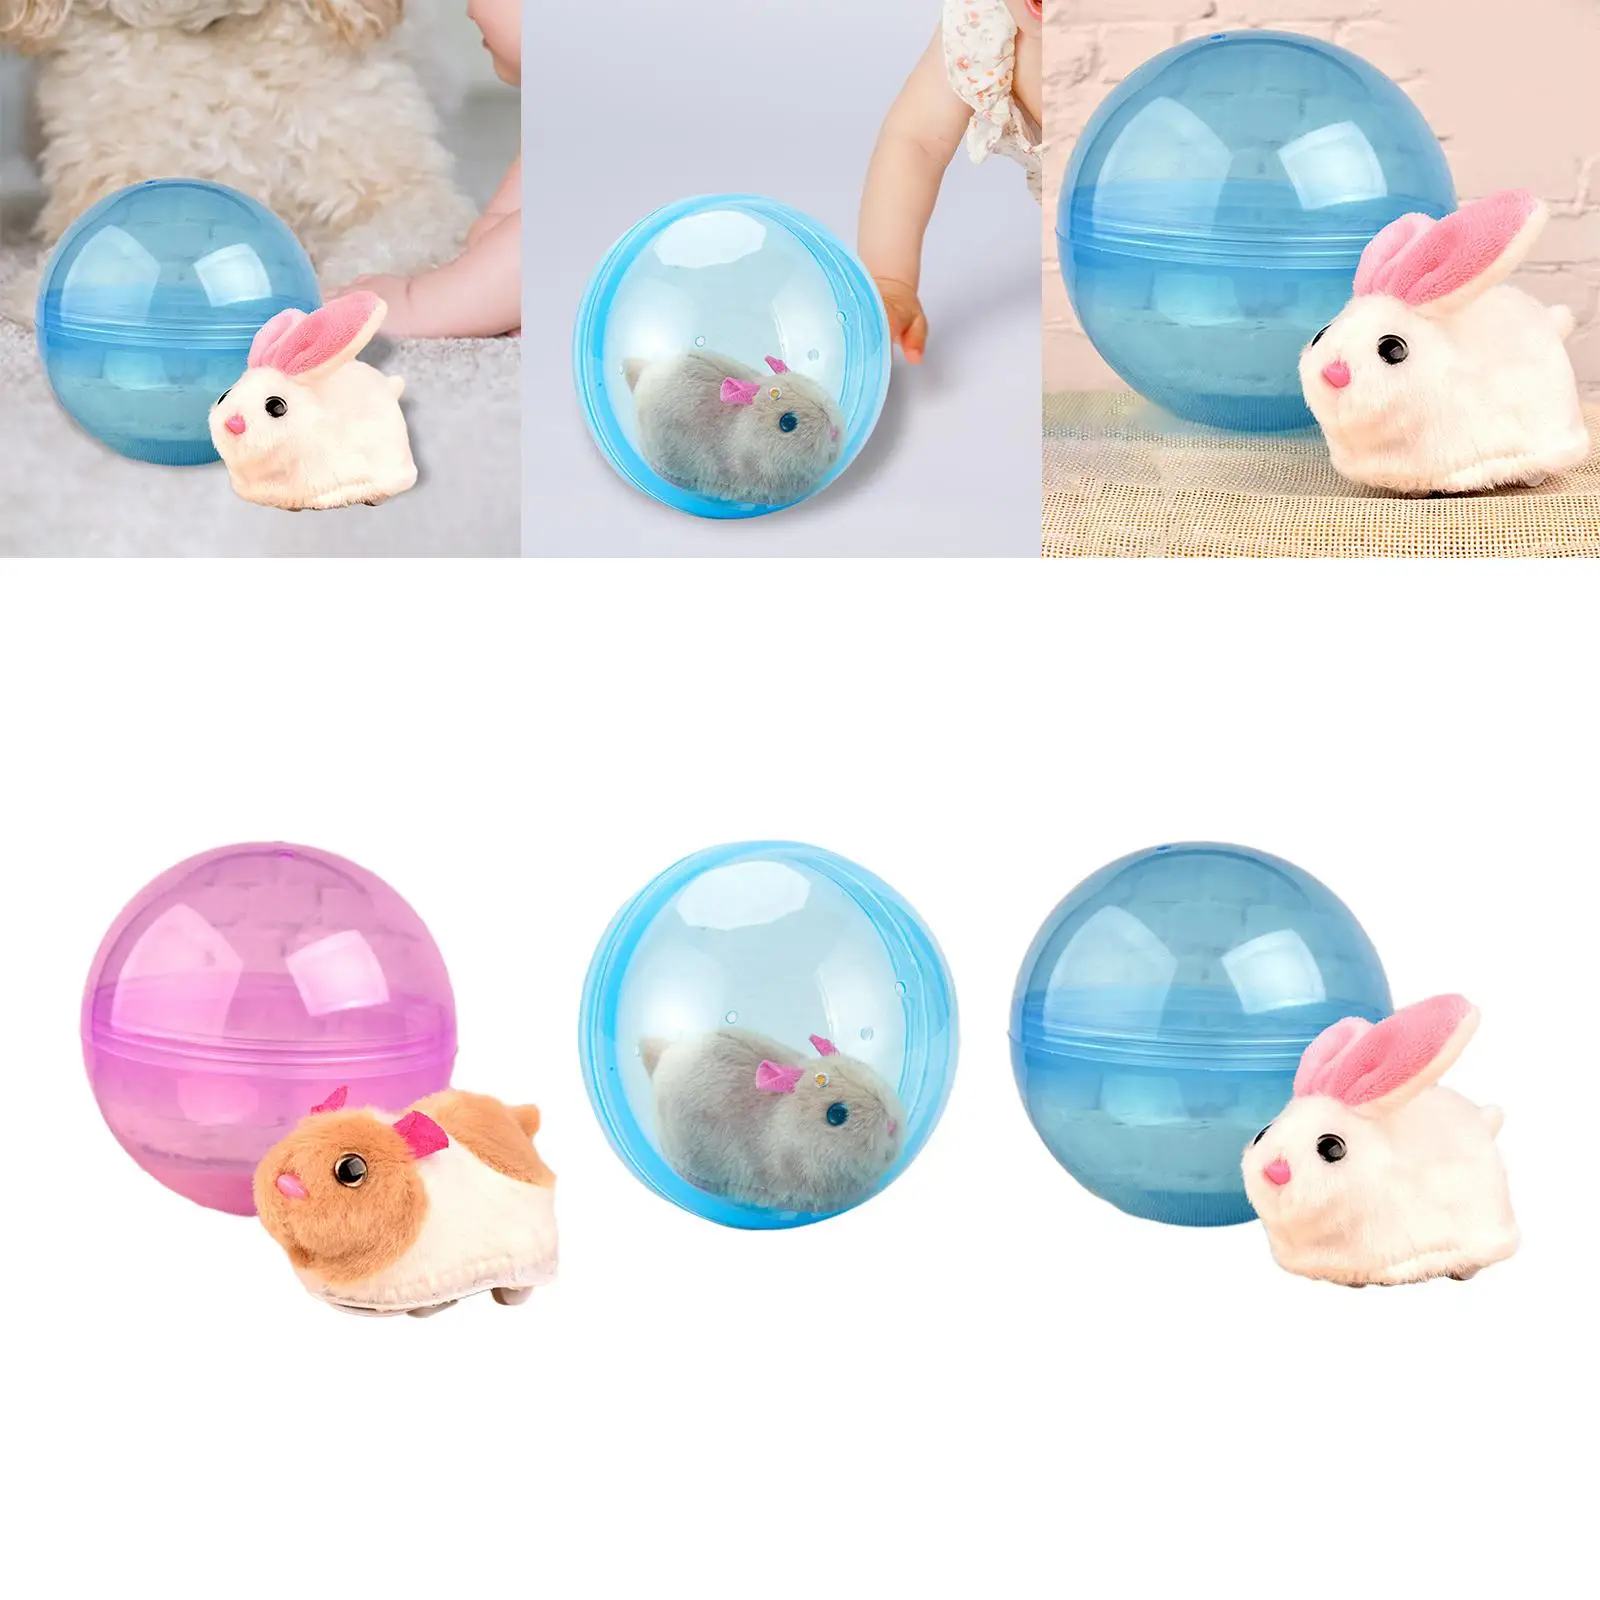 Electric Ball Toys Enjoy Fun Interactive Electronic Pets Toy Plush Animals Toys